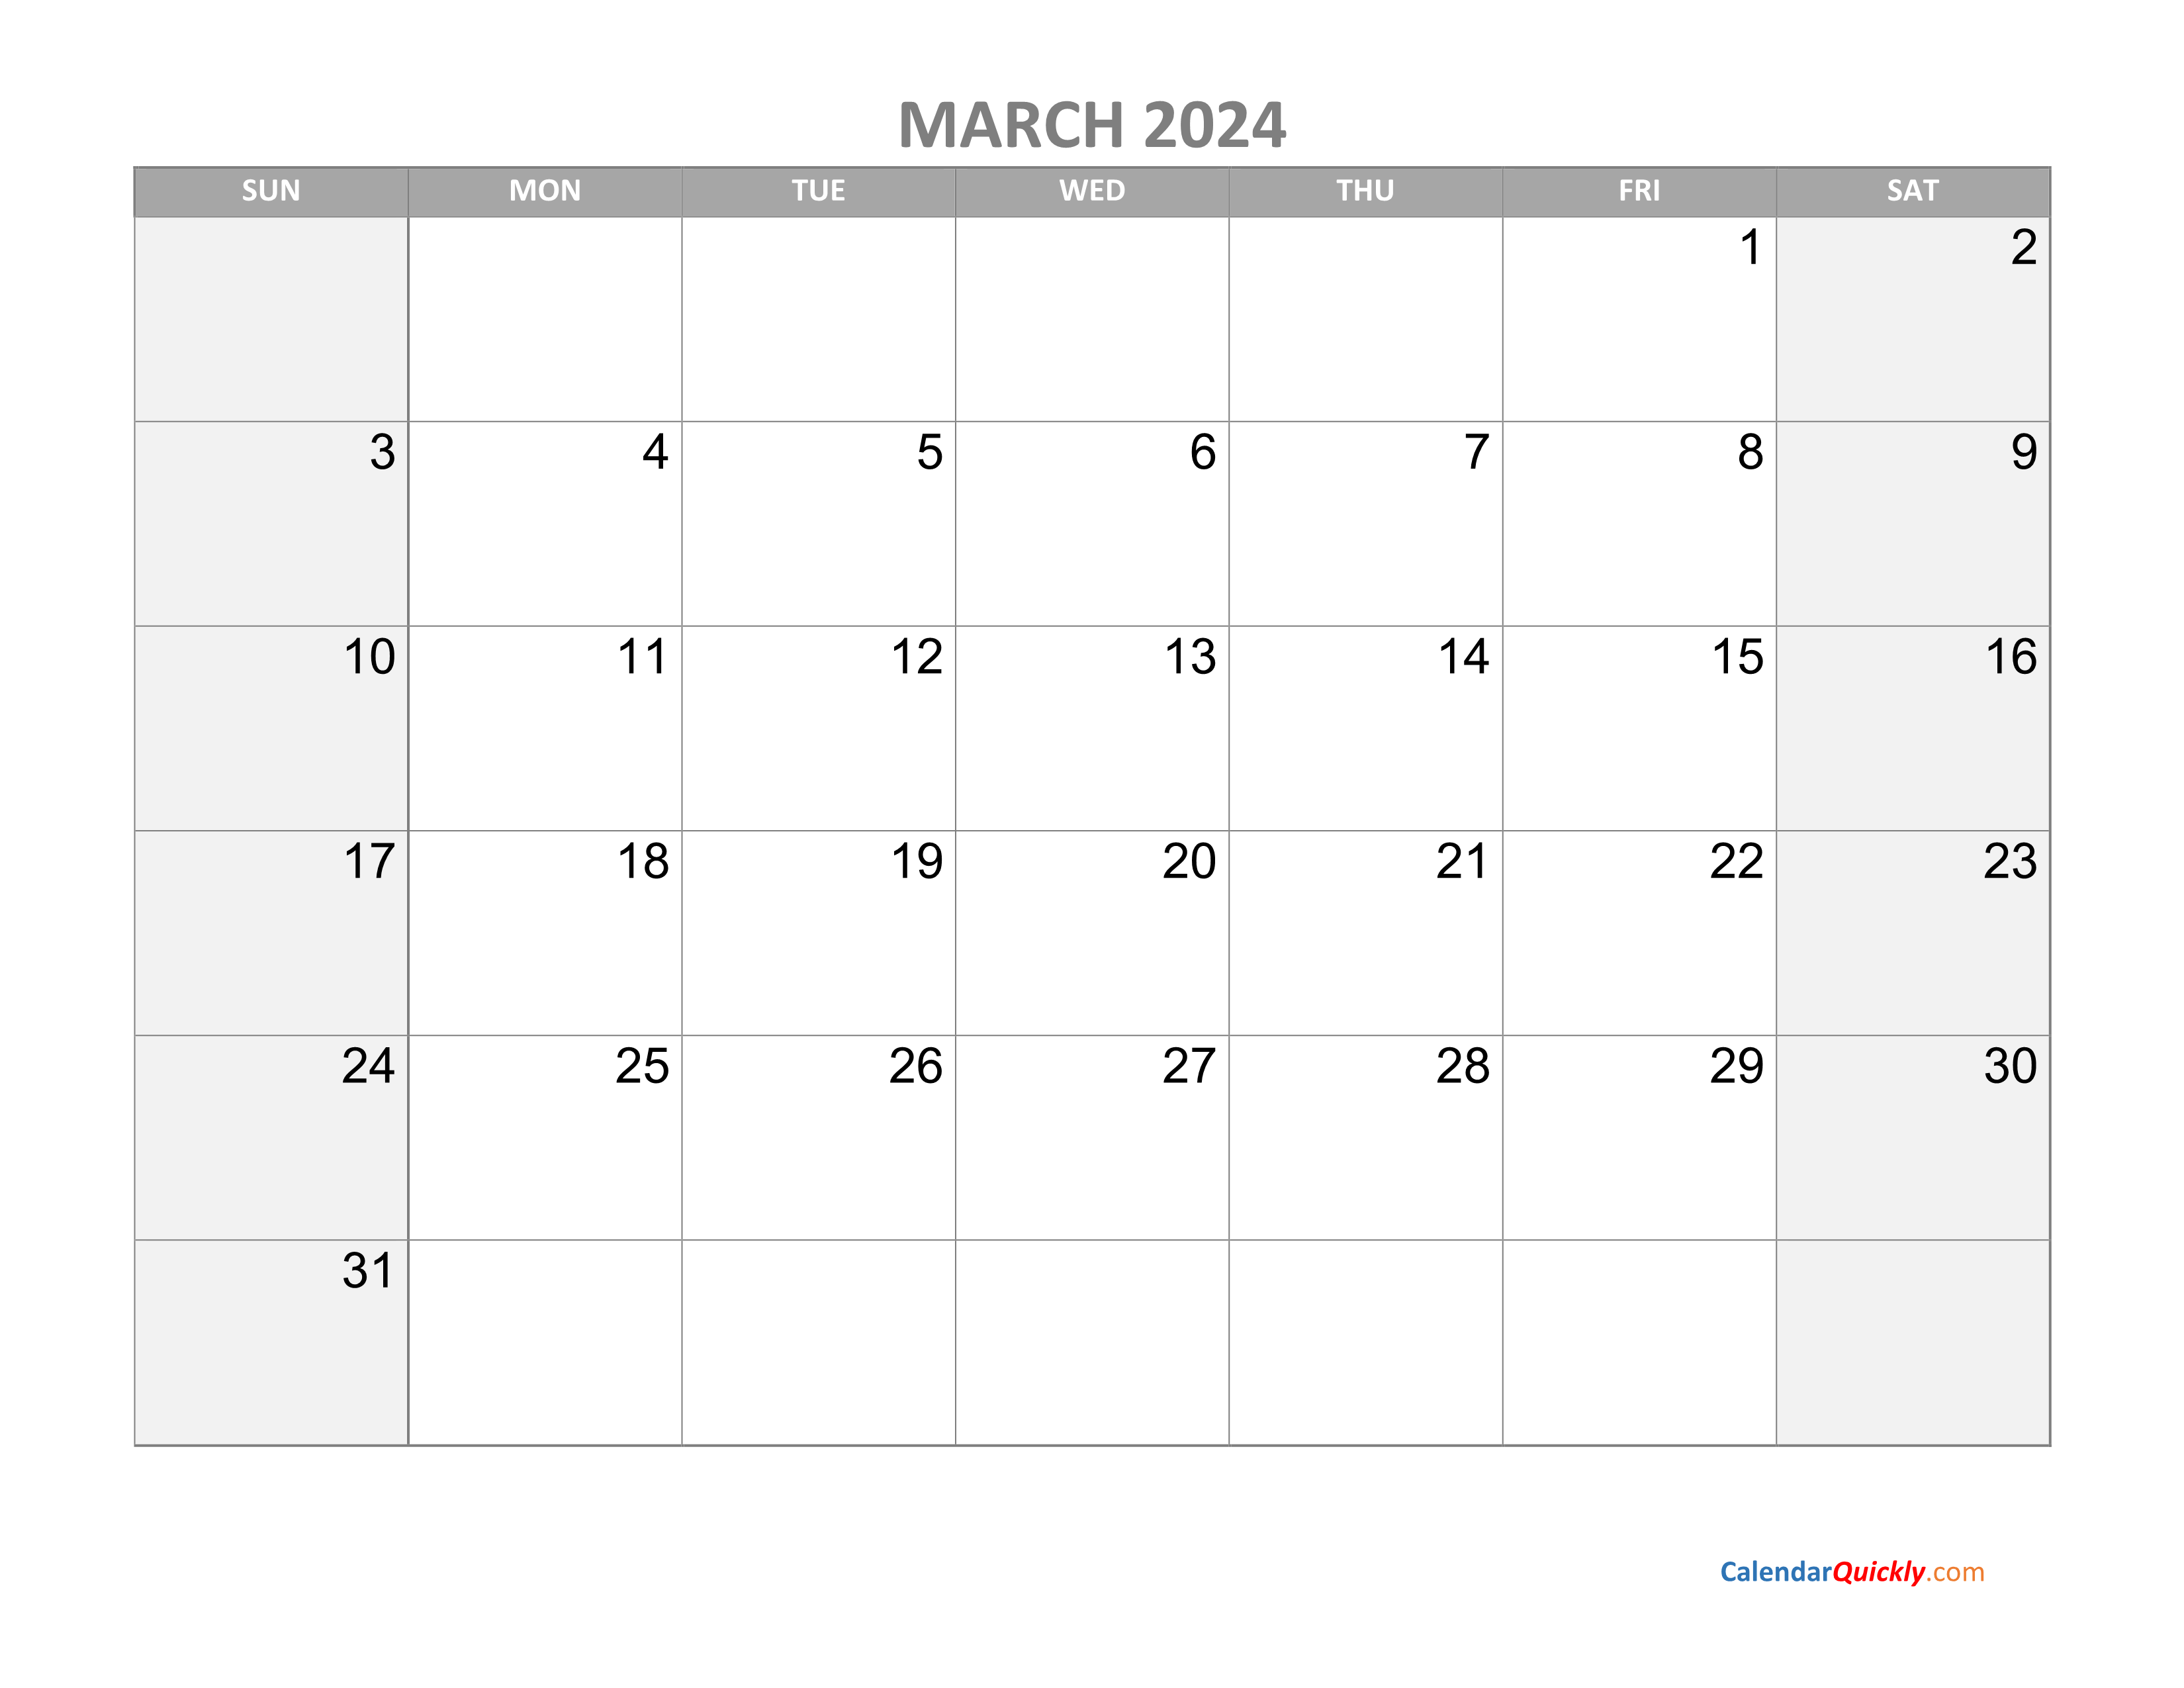 march-calendar-2024-with-holidays-calendar-quickly